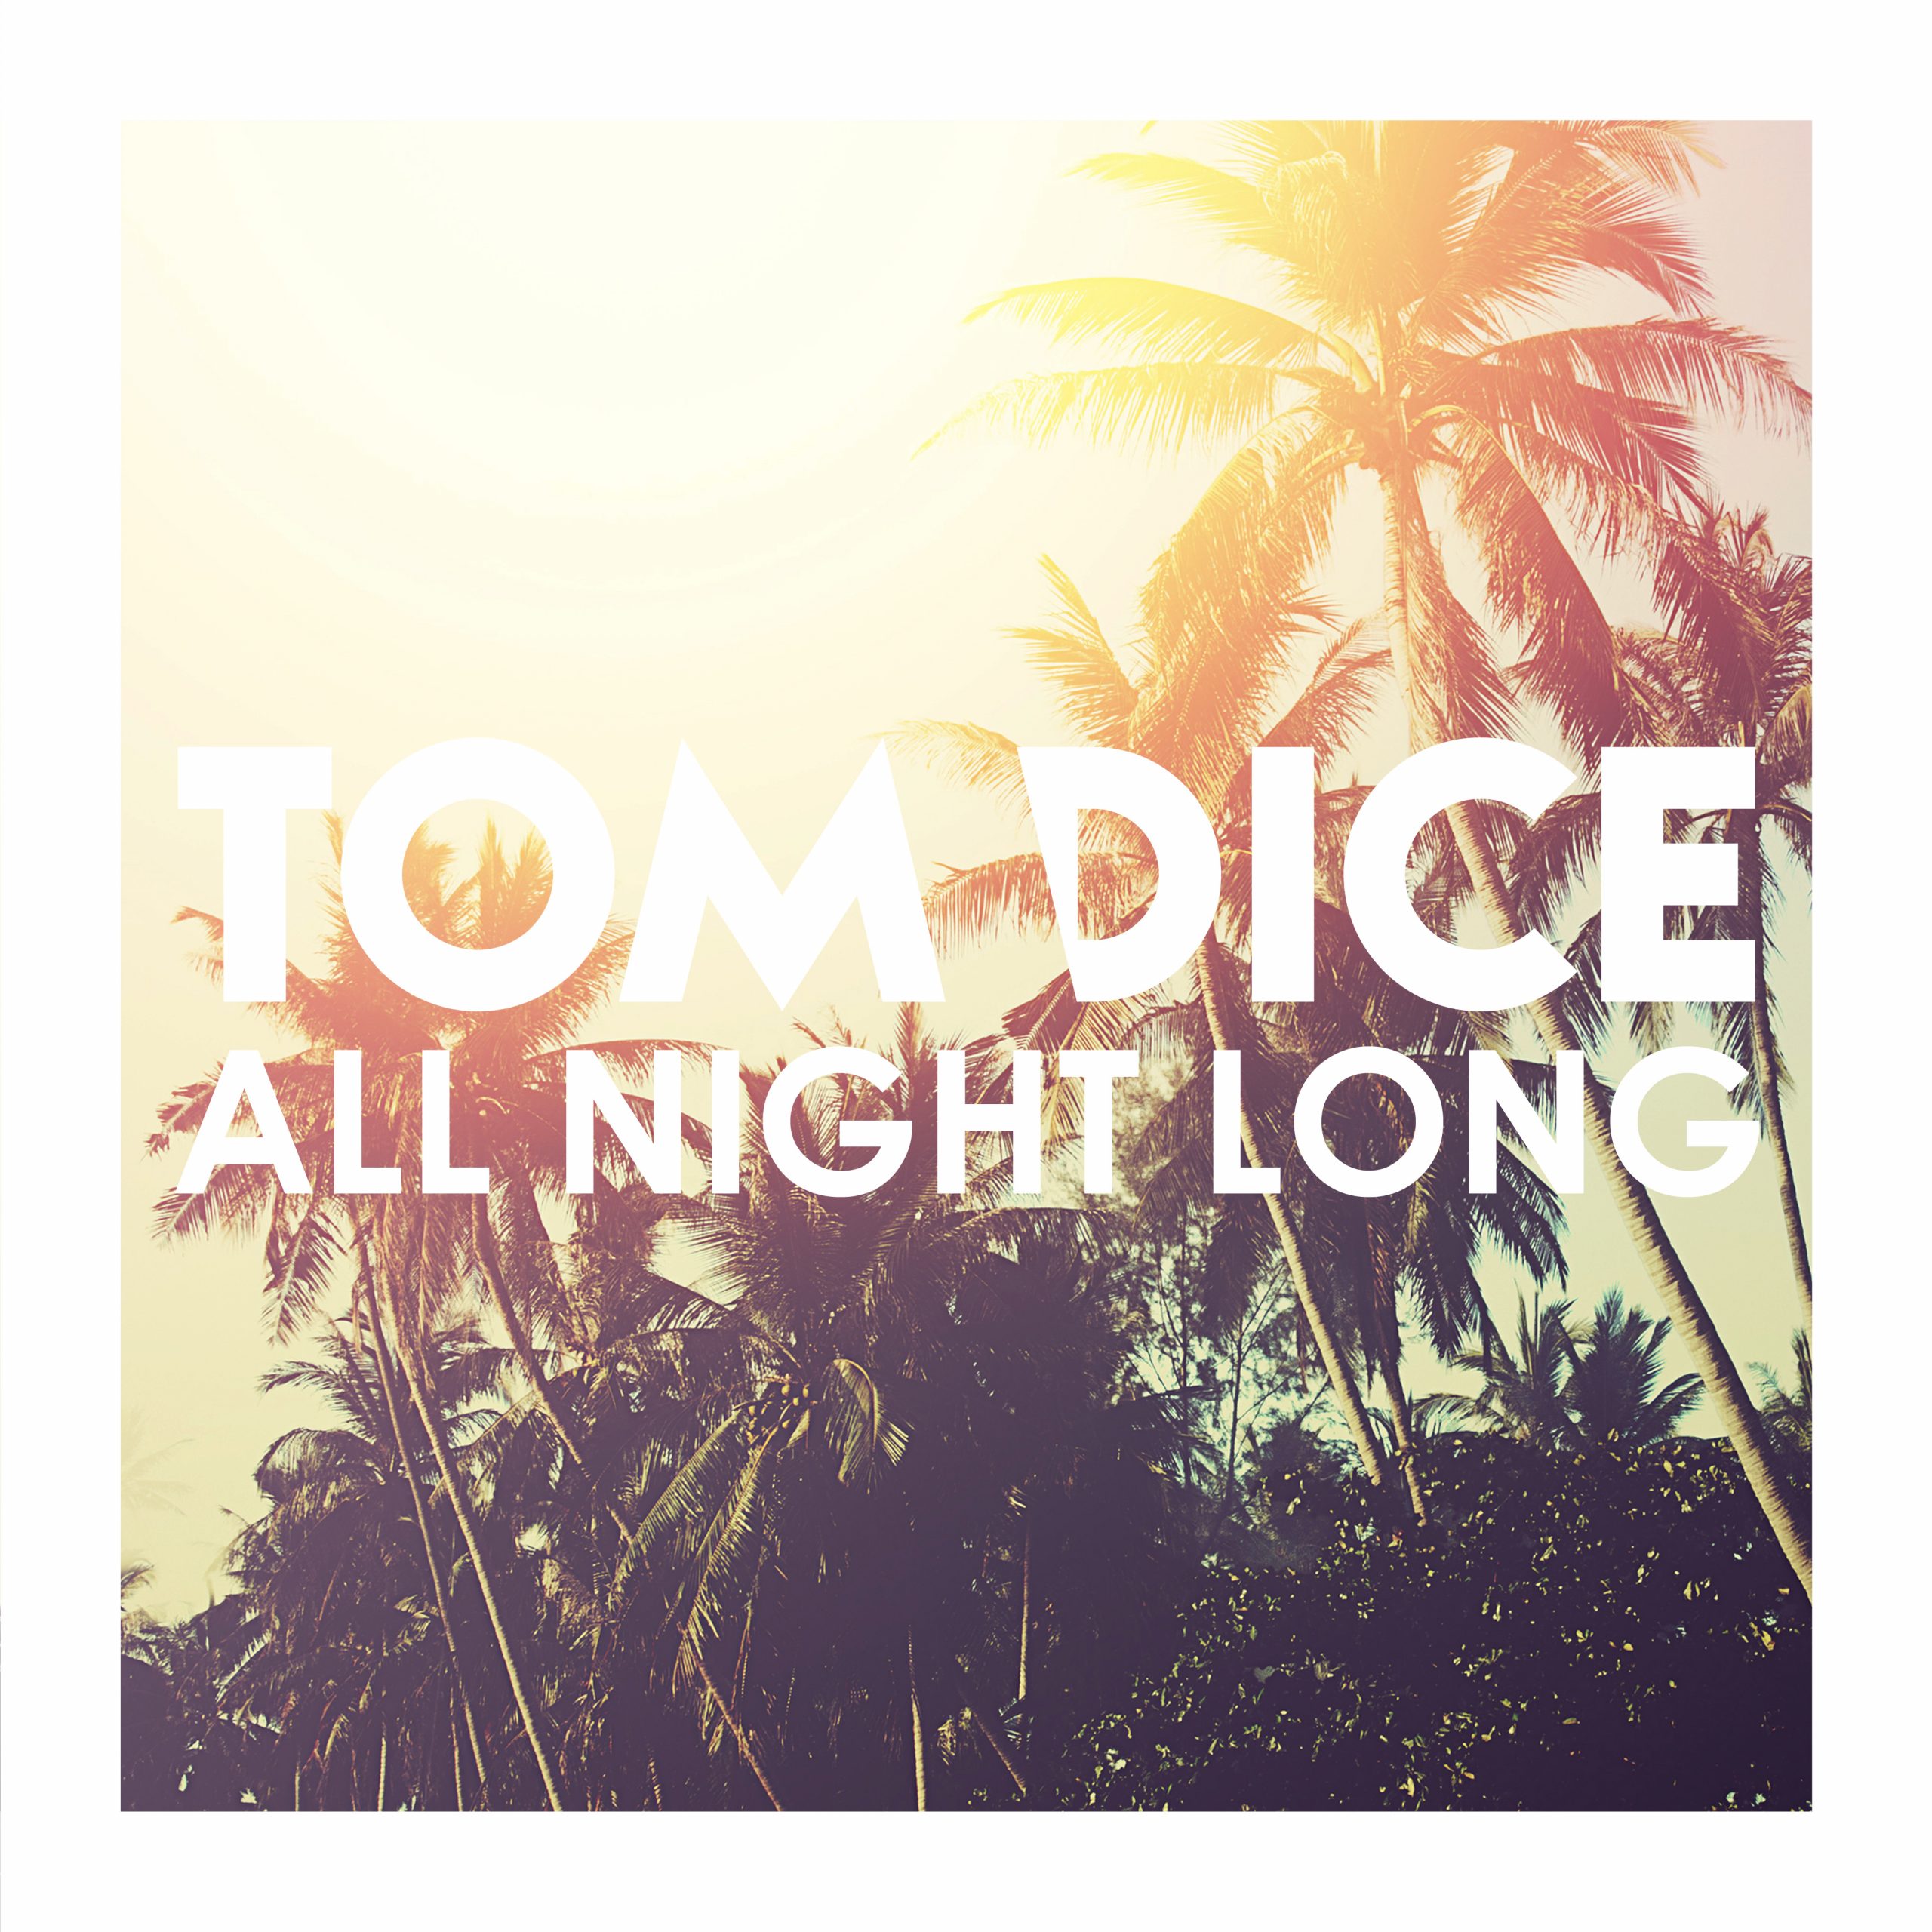 Tom Dice - All Night Long